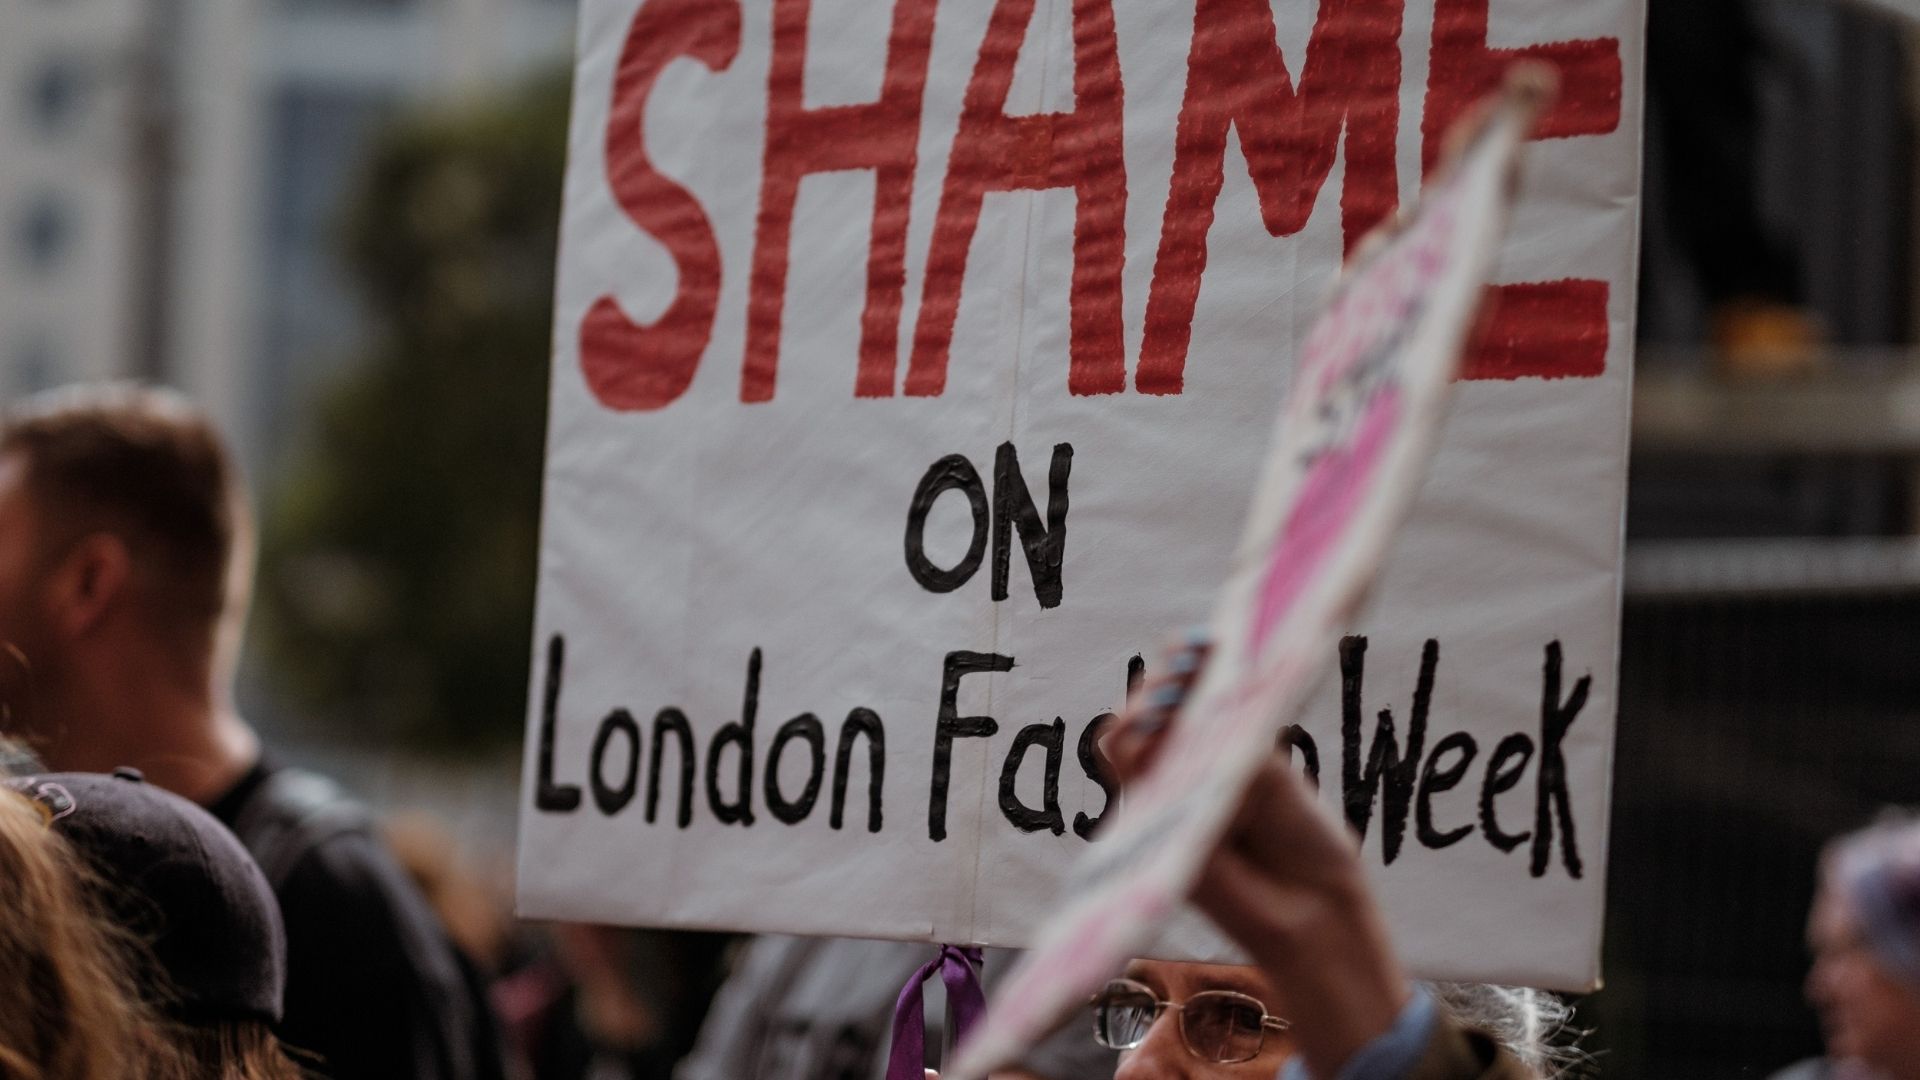 Shame poster held at London Fashion Week